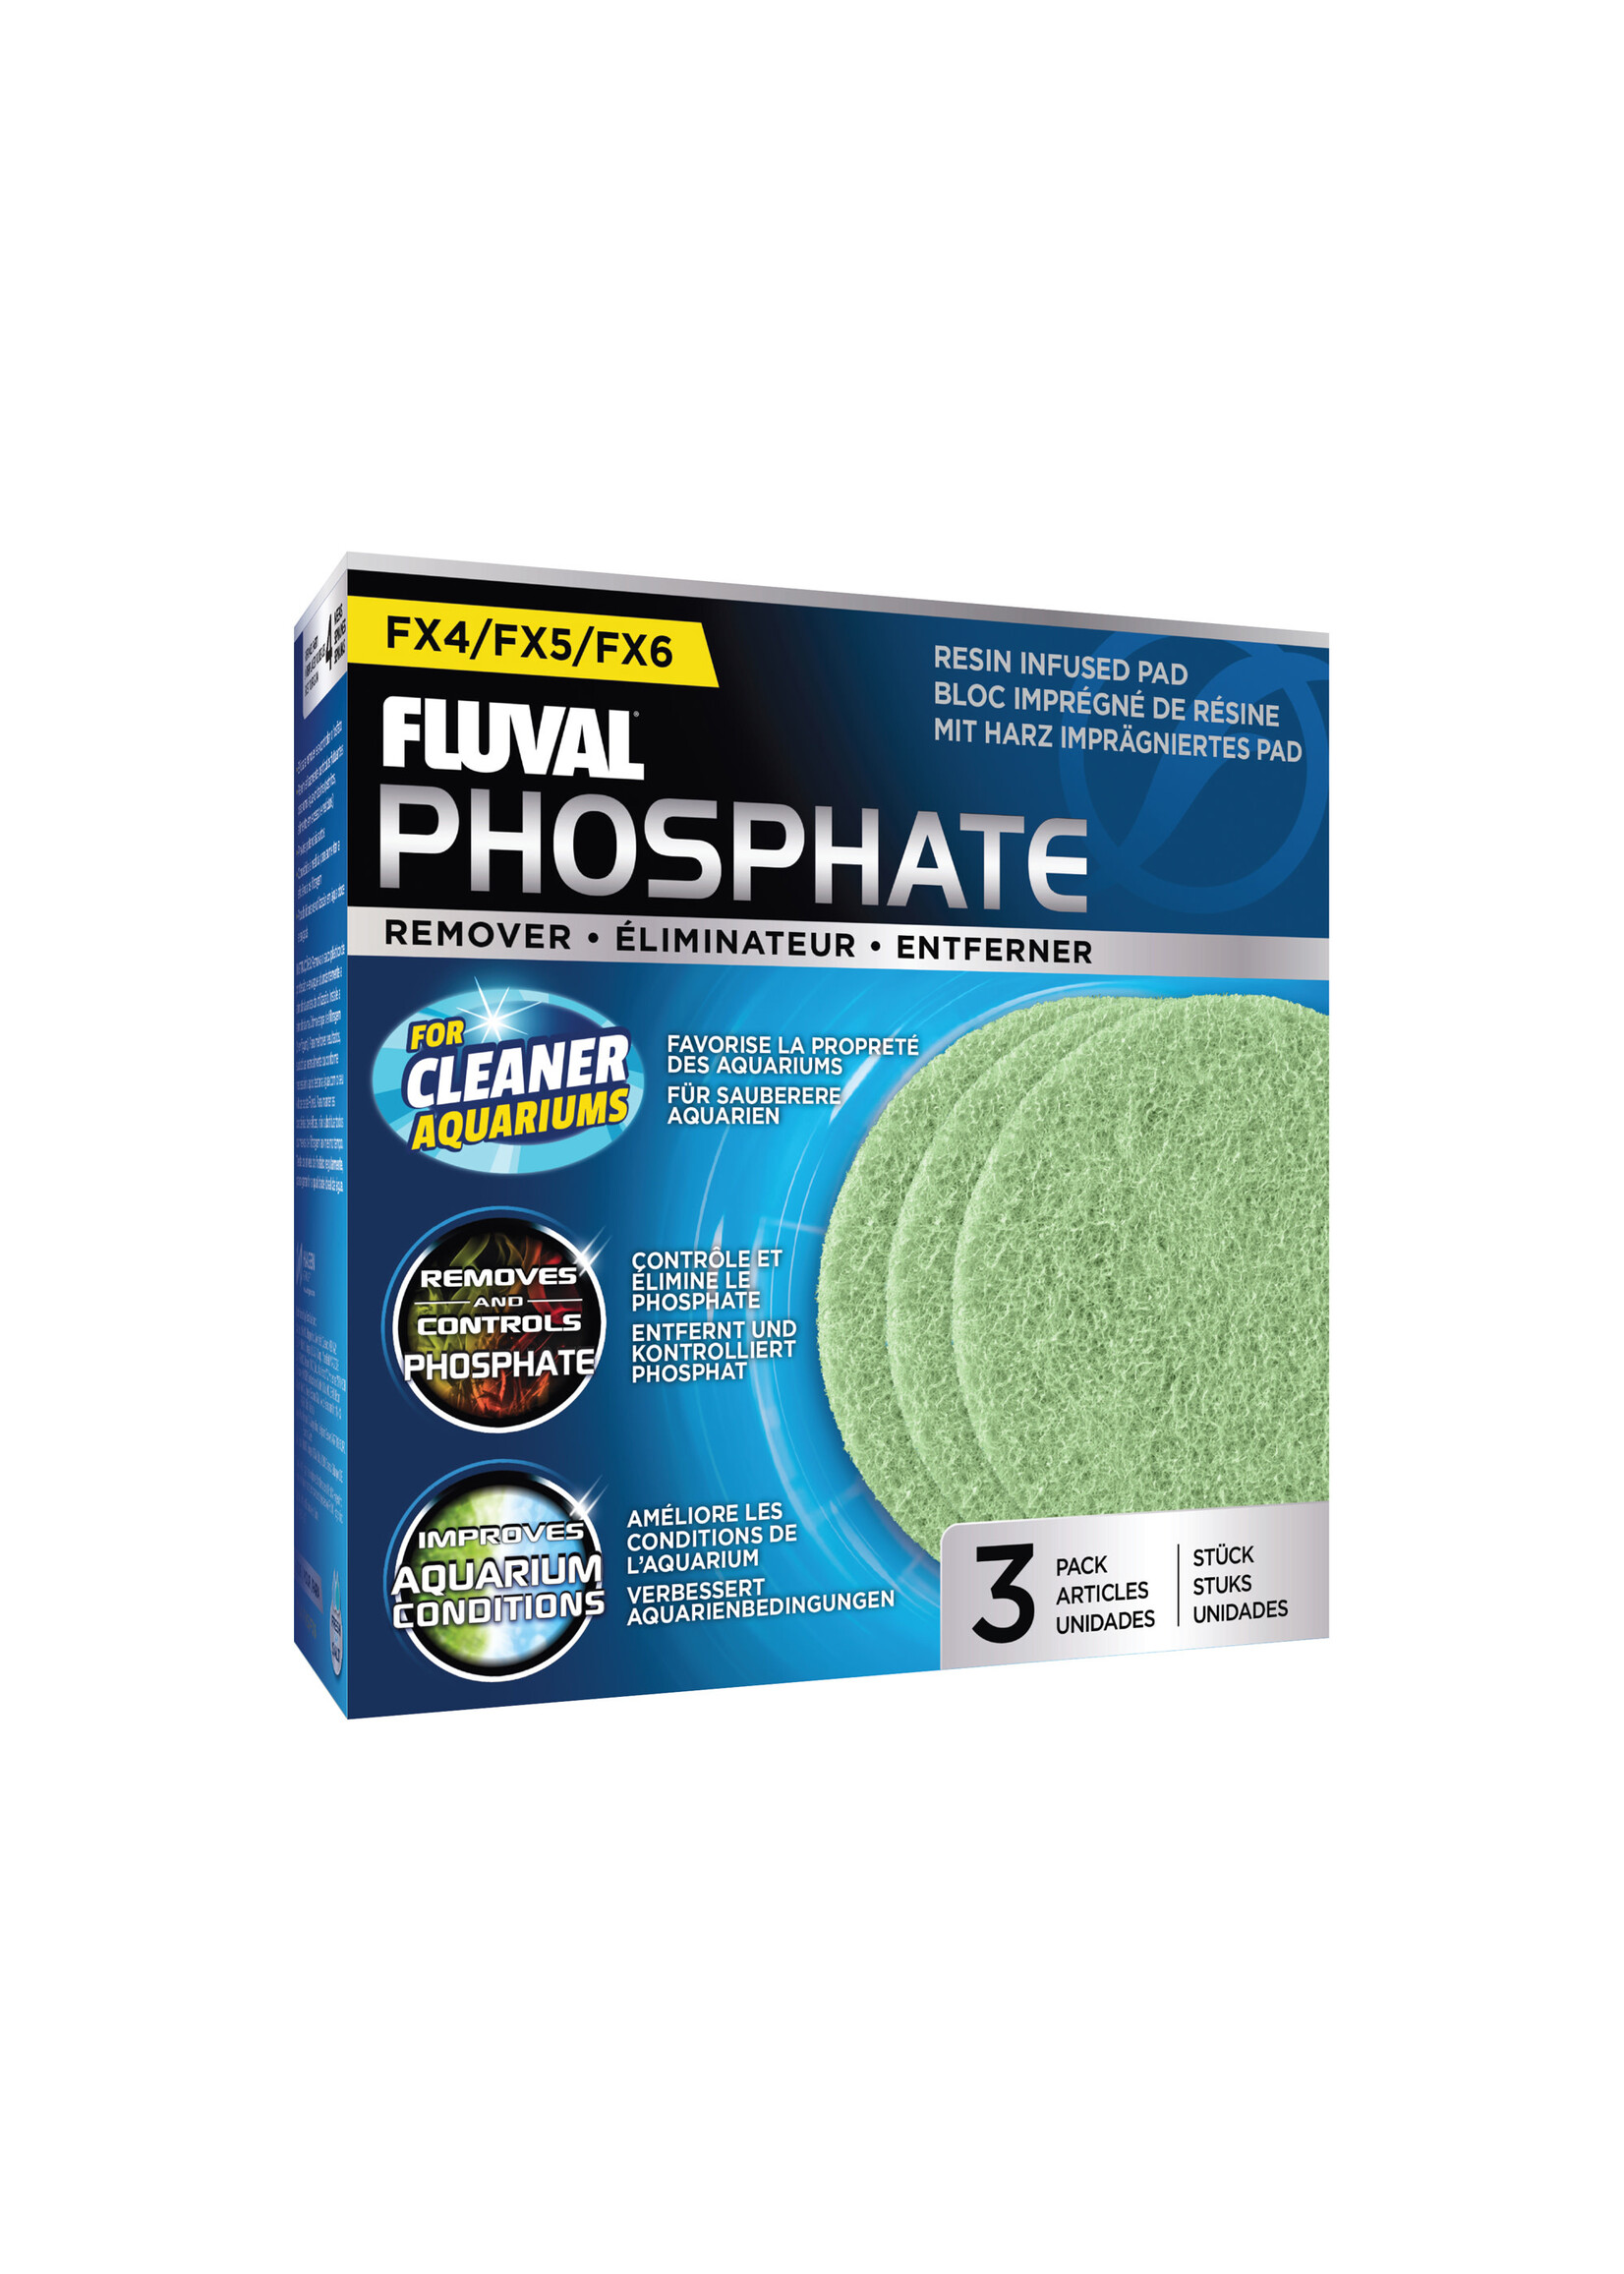 Fluval FX4-FX5-FX6 PHOSPHATE PAD 3 PK